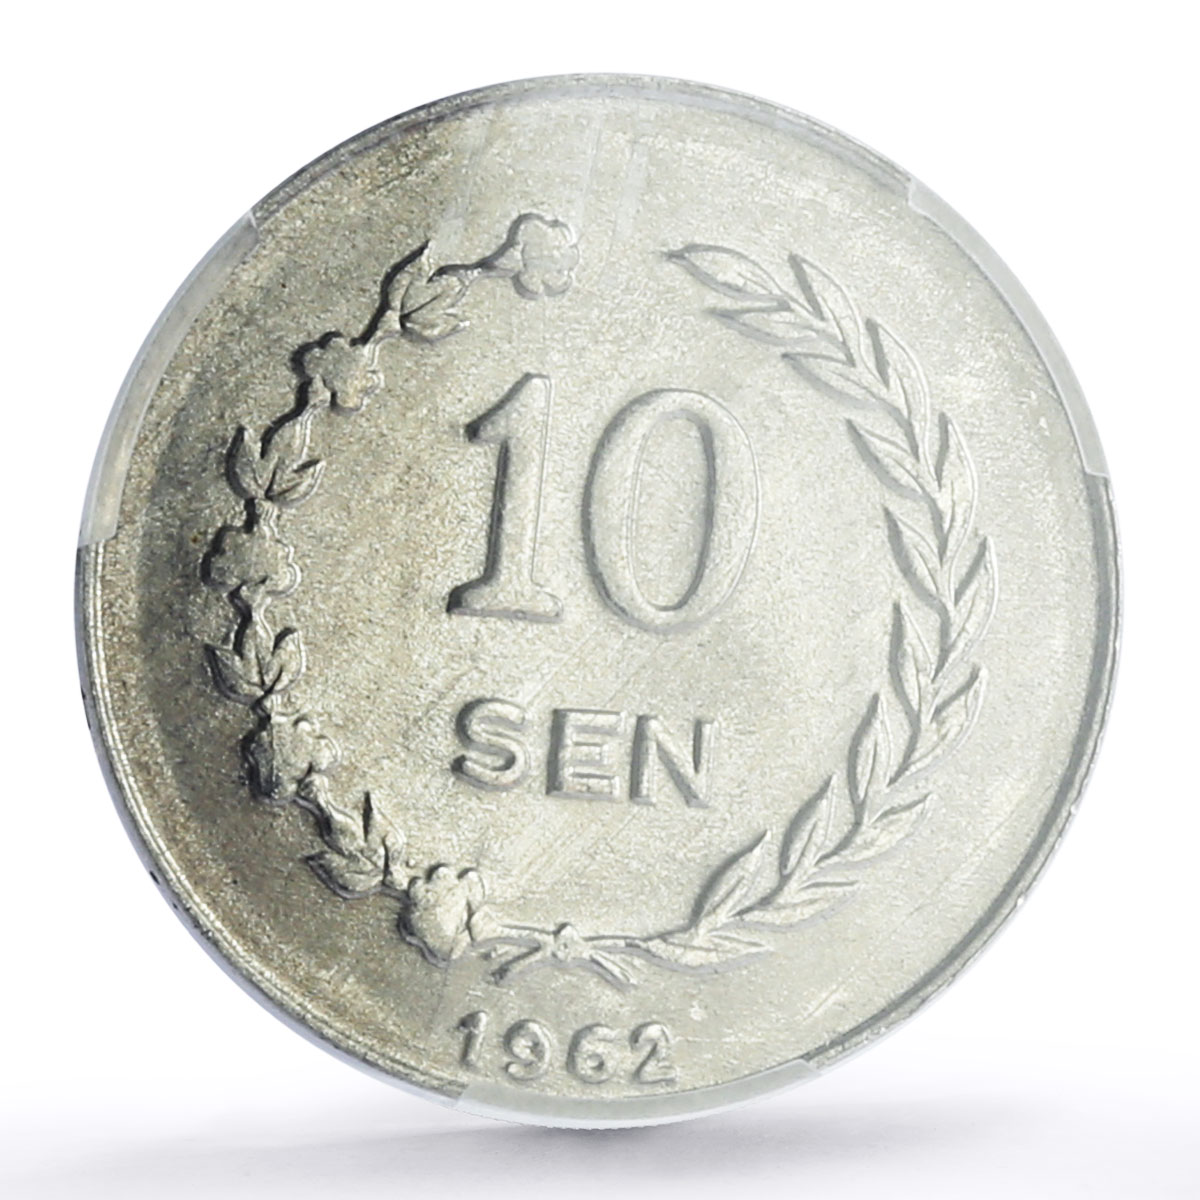 Indonesia Irian Barat 10 sen President Sukarno MS63 PCGS Al coin 1962